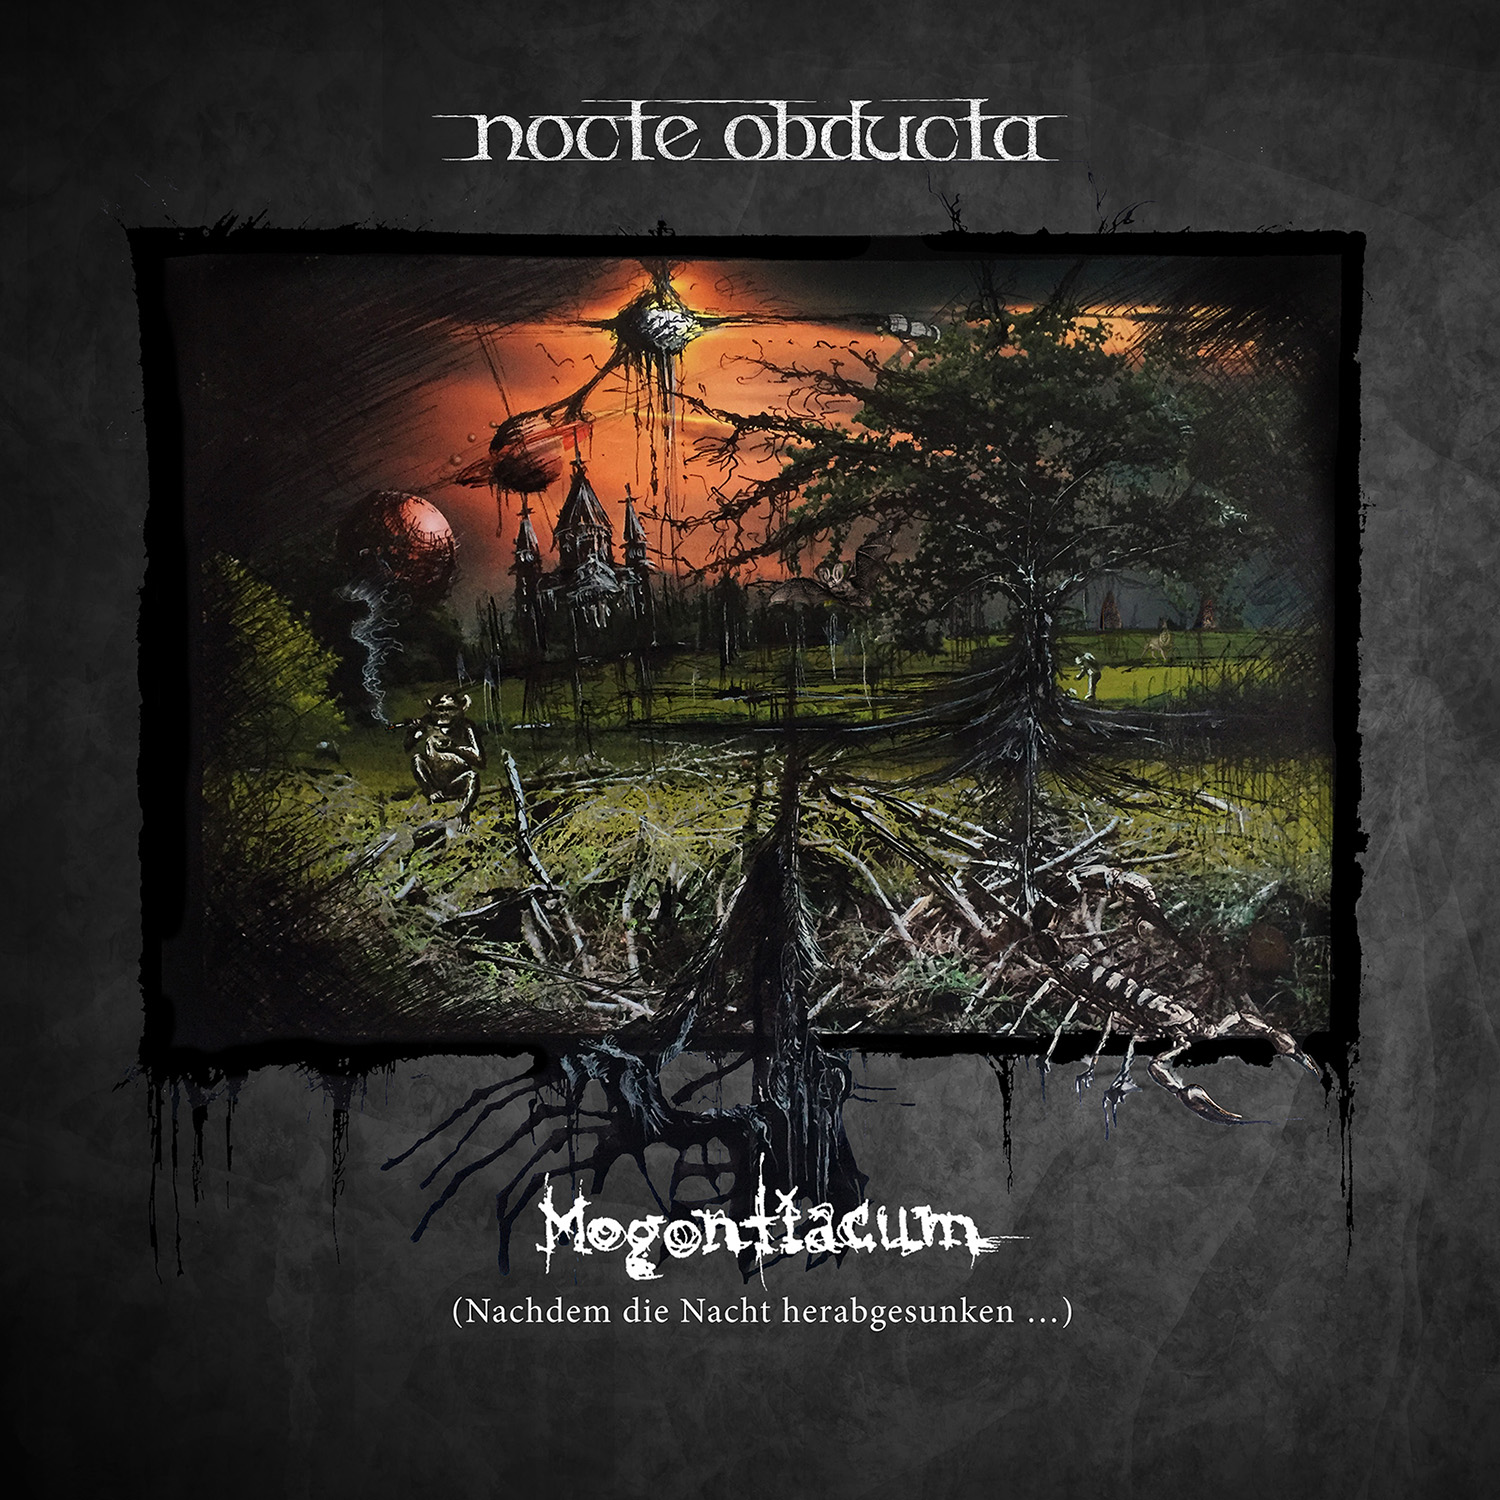 Nocte Obducta - Mogontiacum (Nachdem die Nacht herabgesunken) EXCLUSIVE Bundle Double-LP 2LP